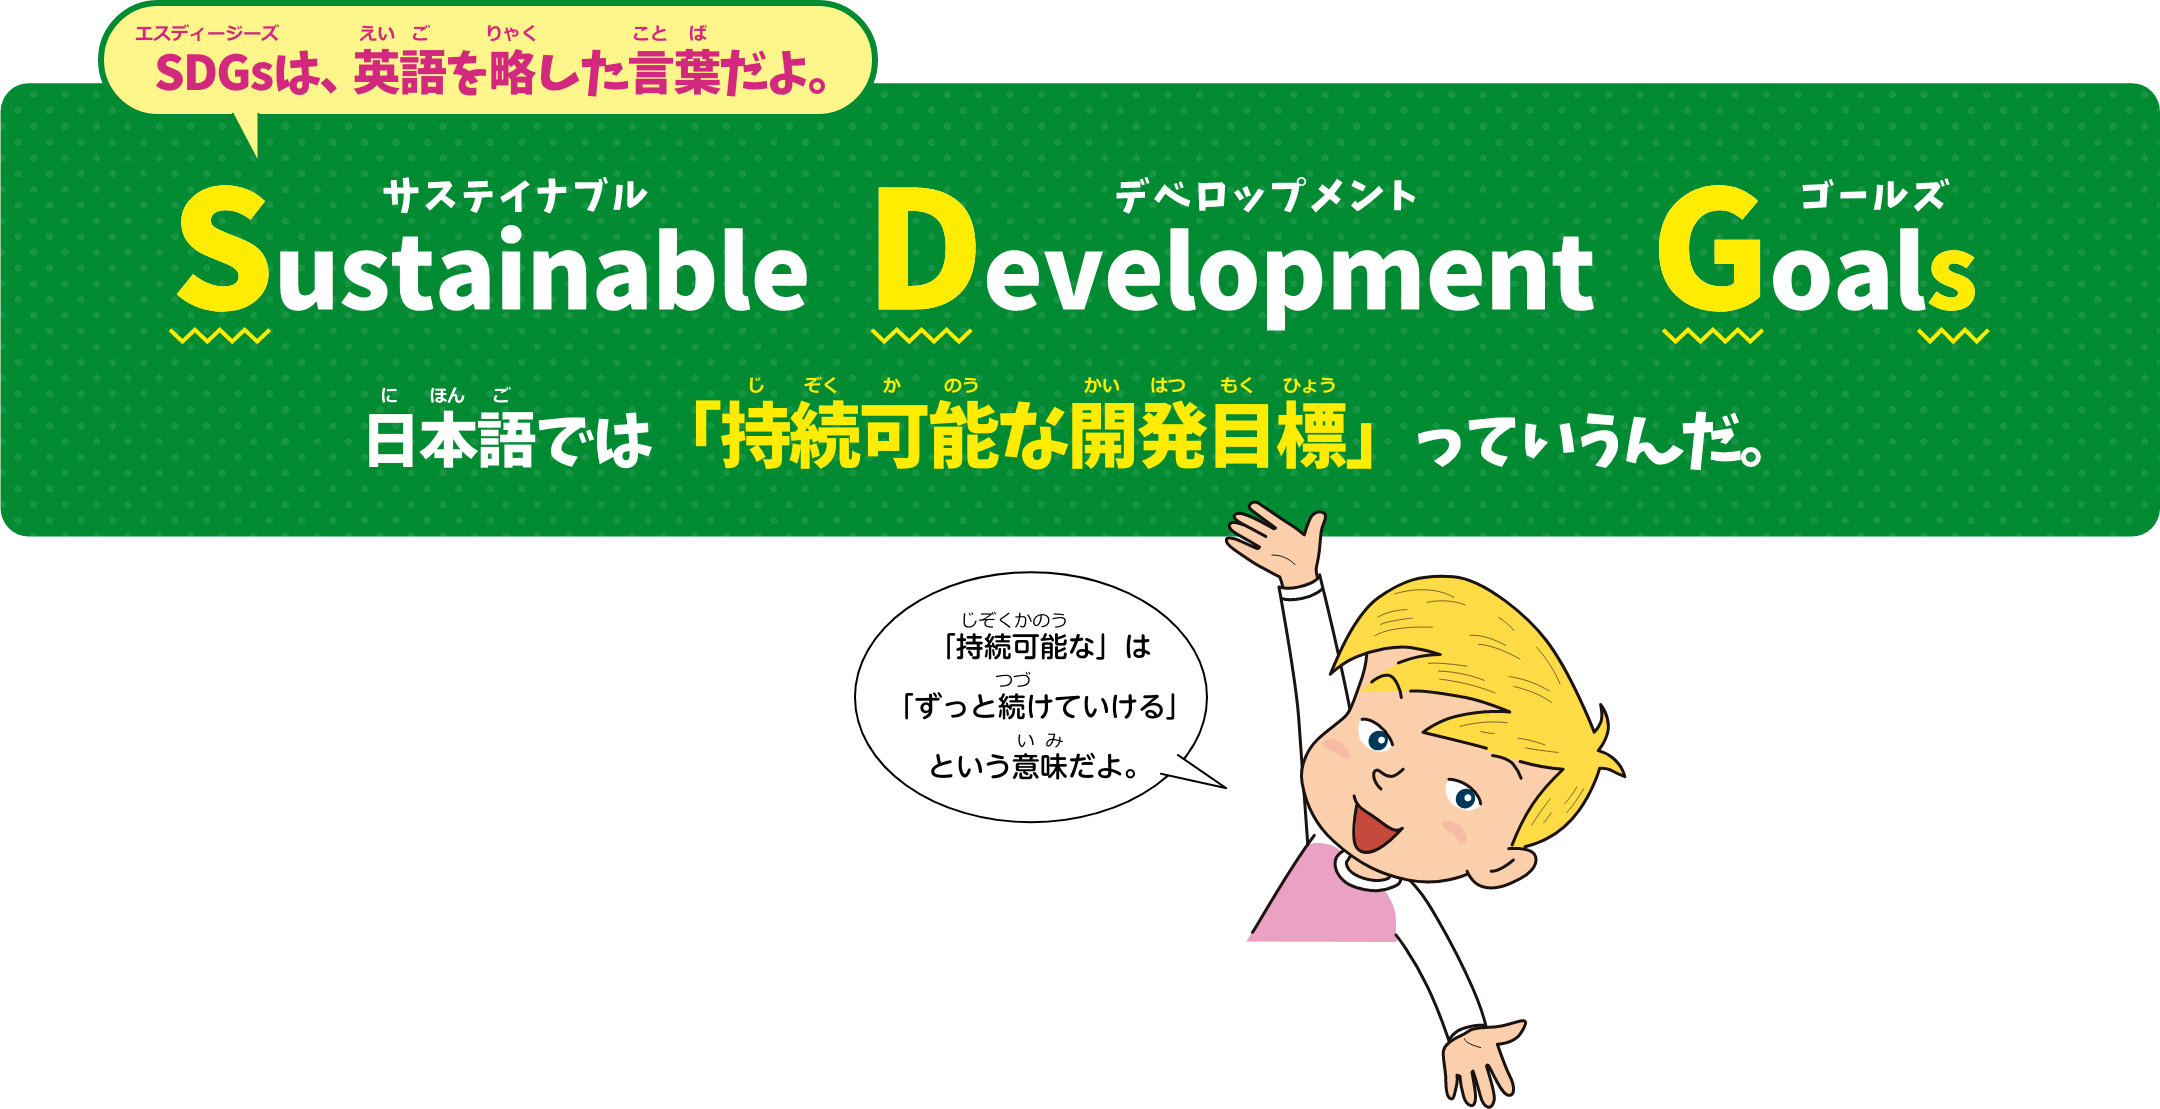 SDGsは、英語を略した言葉だよ。Sustainable Development Goals 日本語では「持続可能な開発目標」っていうんだ。